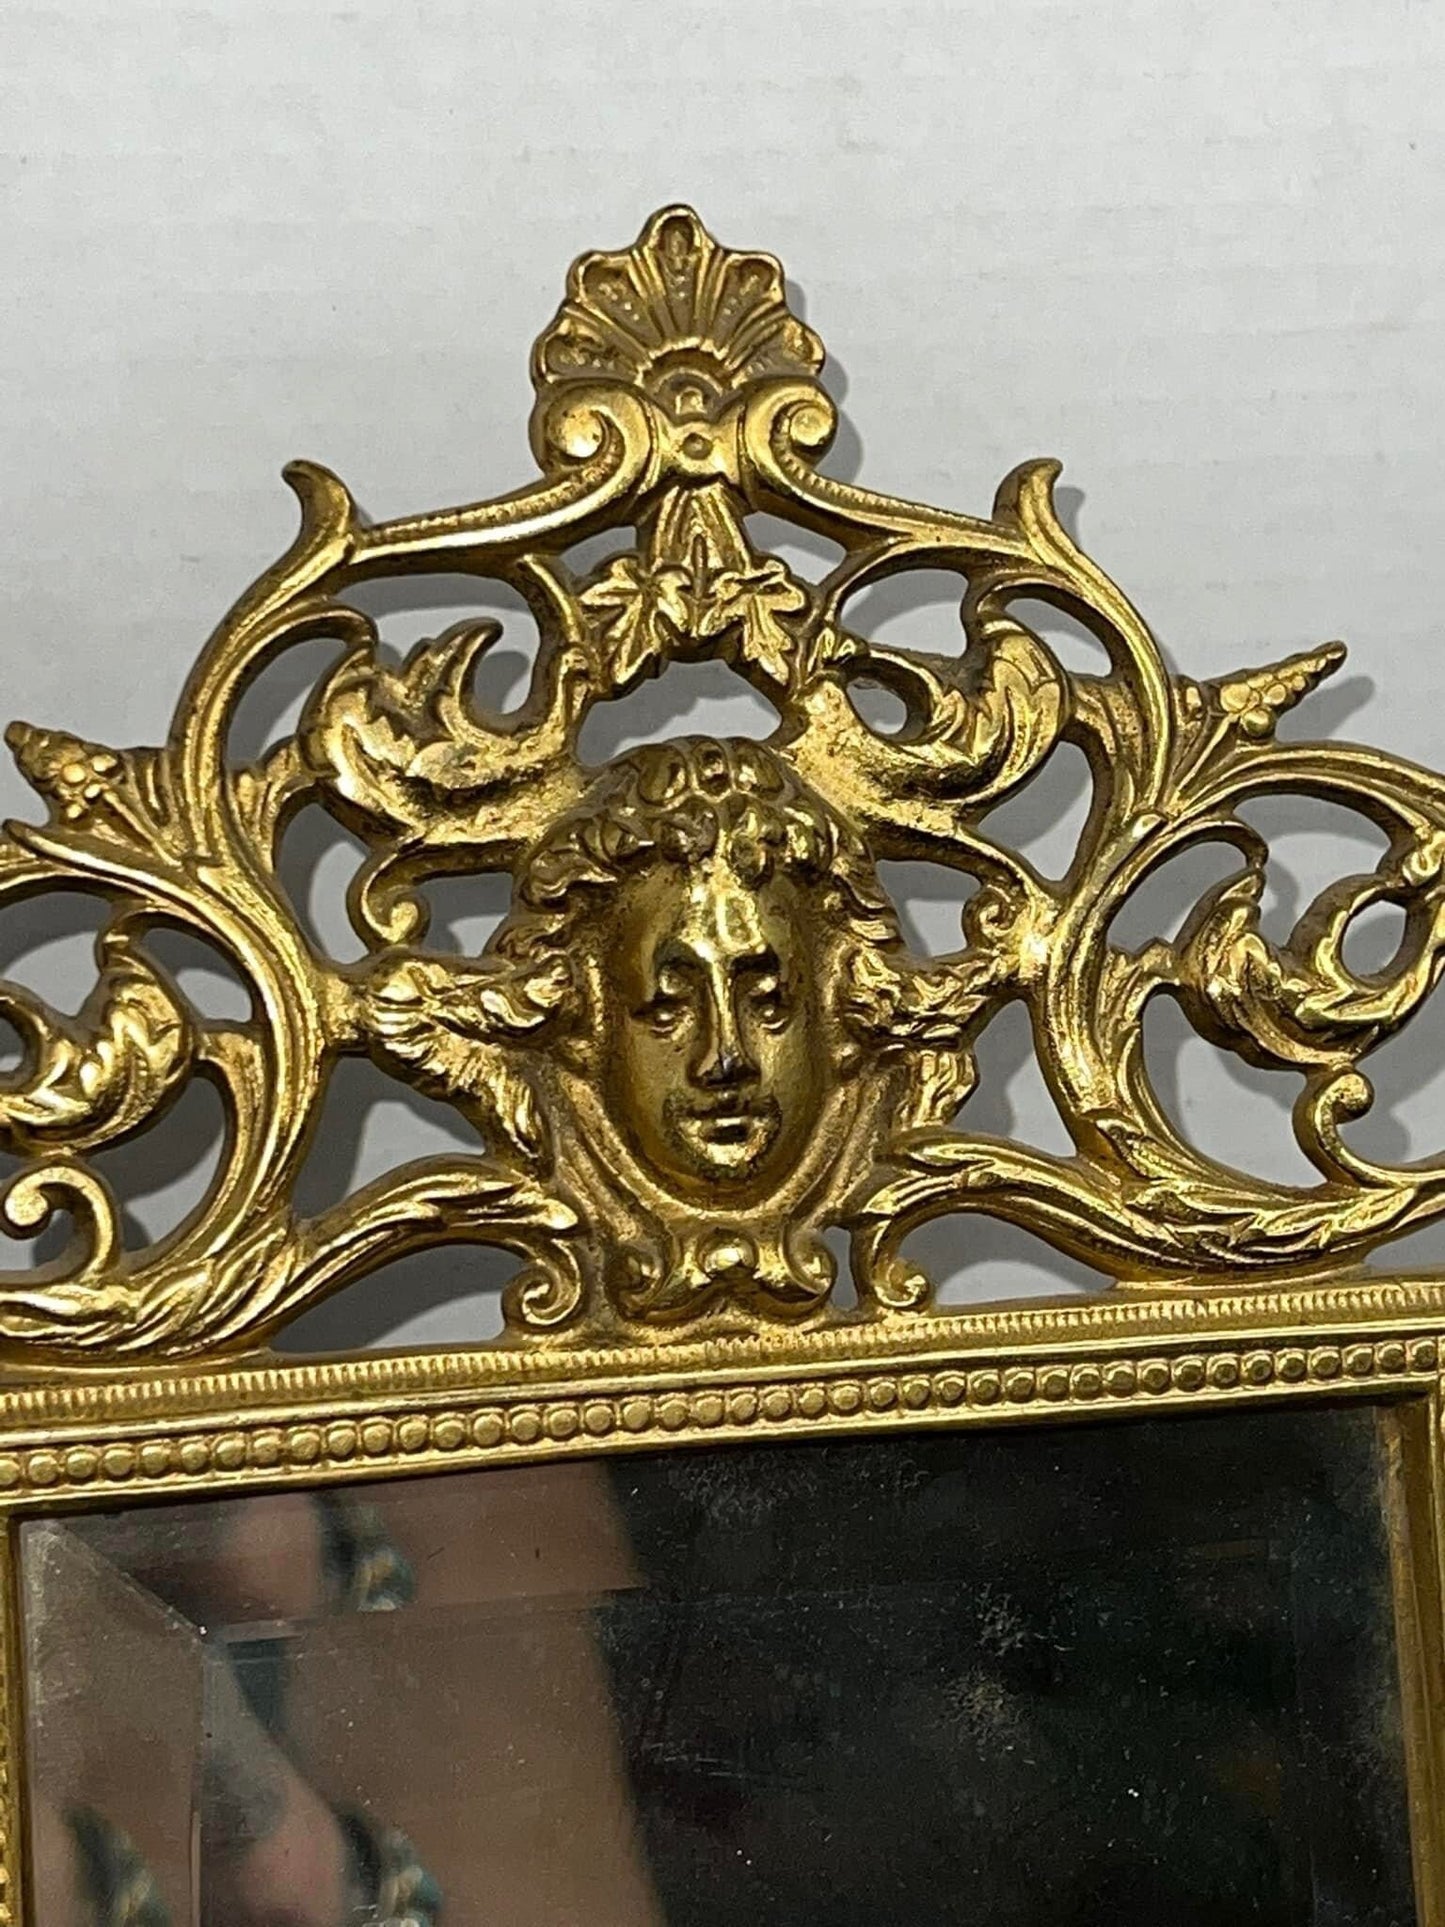 Antique Art nouveau Gold ornate iron mirror frame cherubs face picture frame